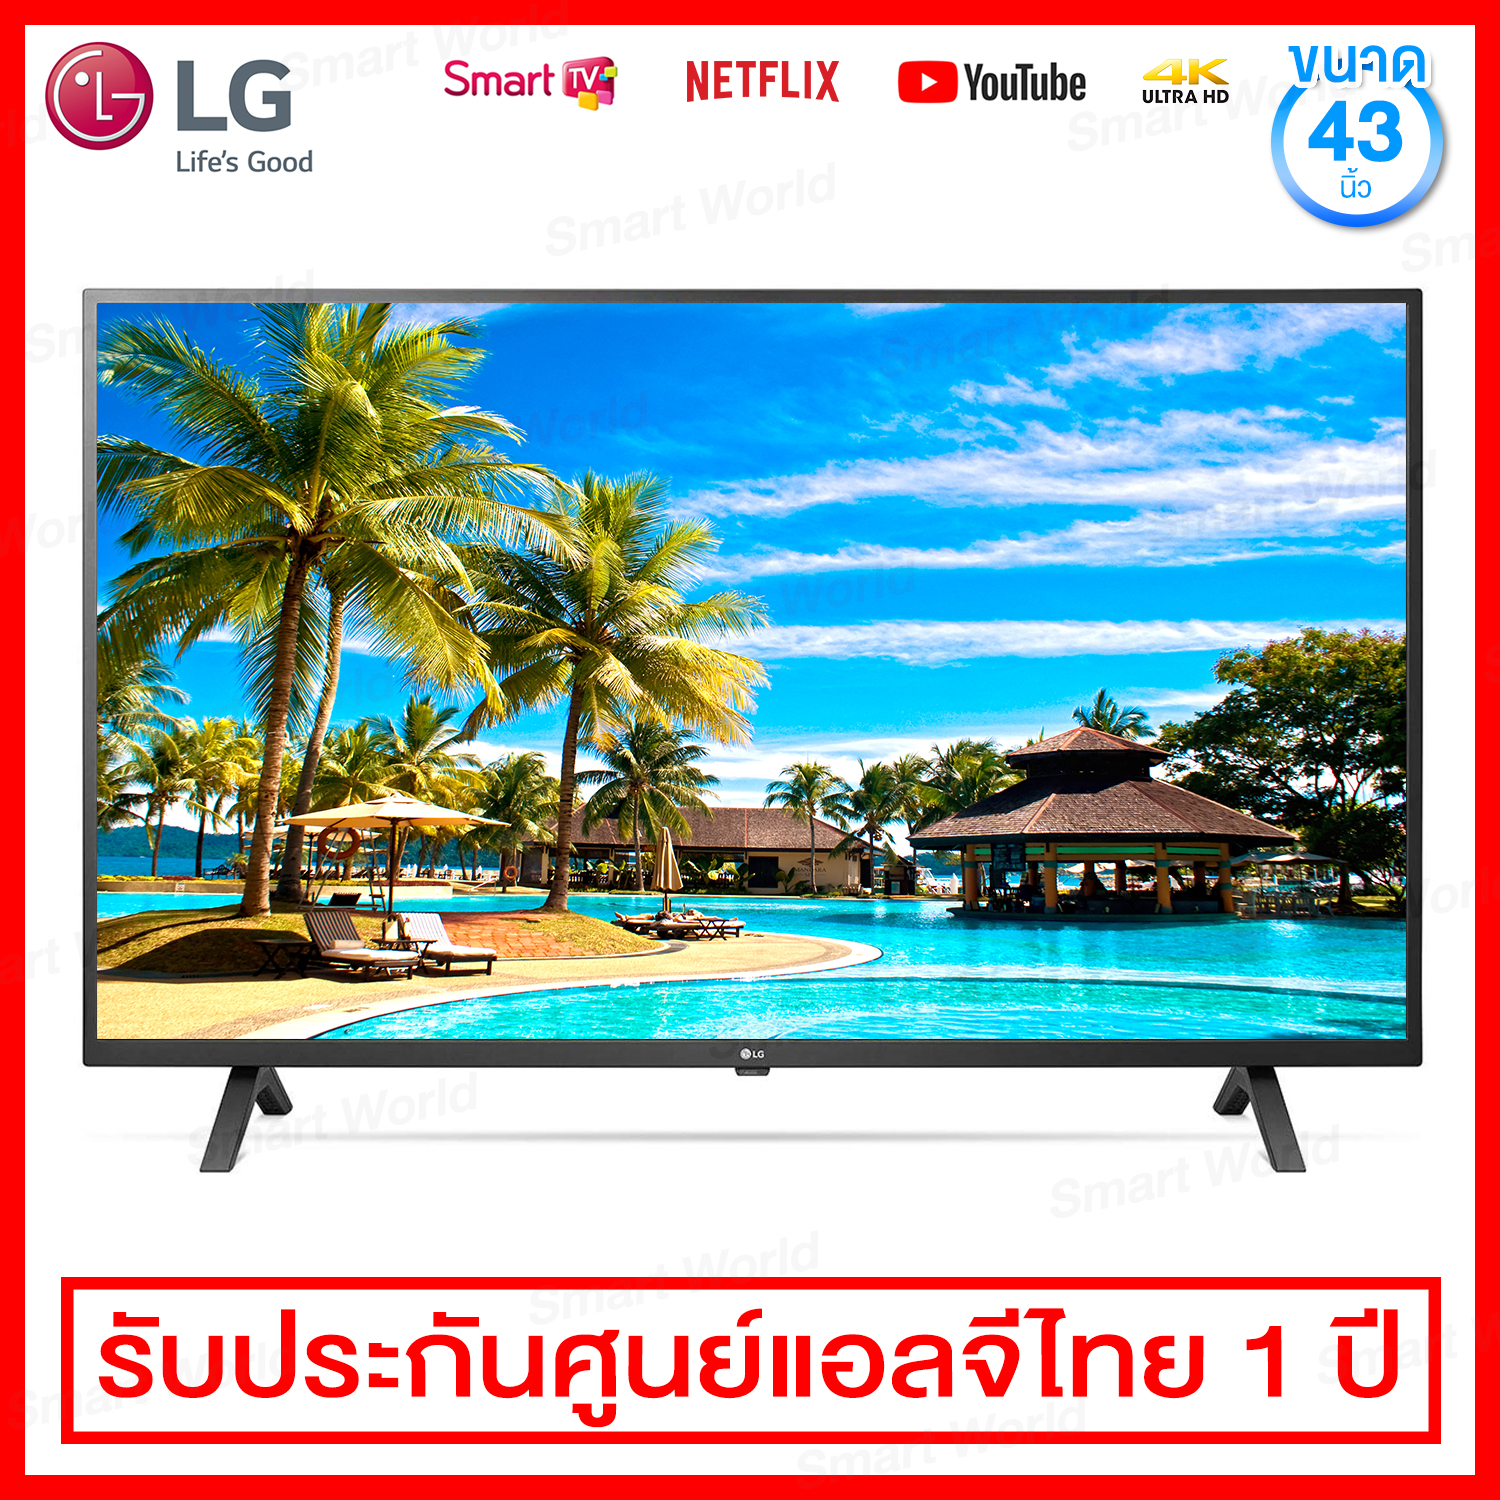 LG LED UHD 4K Smart TV ขนาด 43 นิ้ว / Netflix / Web Browser รุ่น 43UN7000PTA